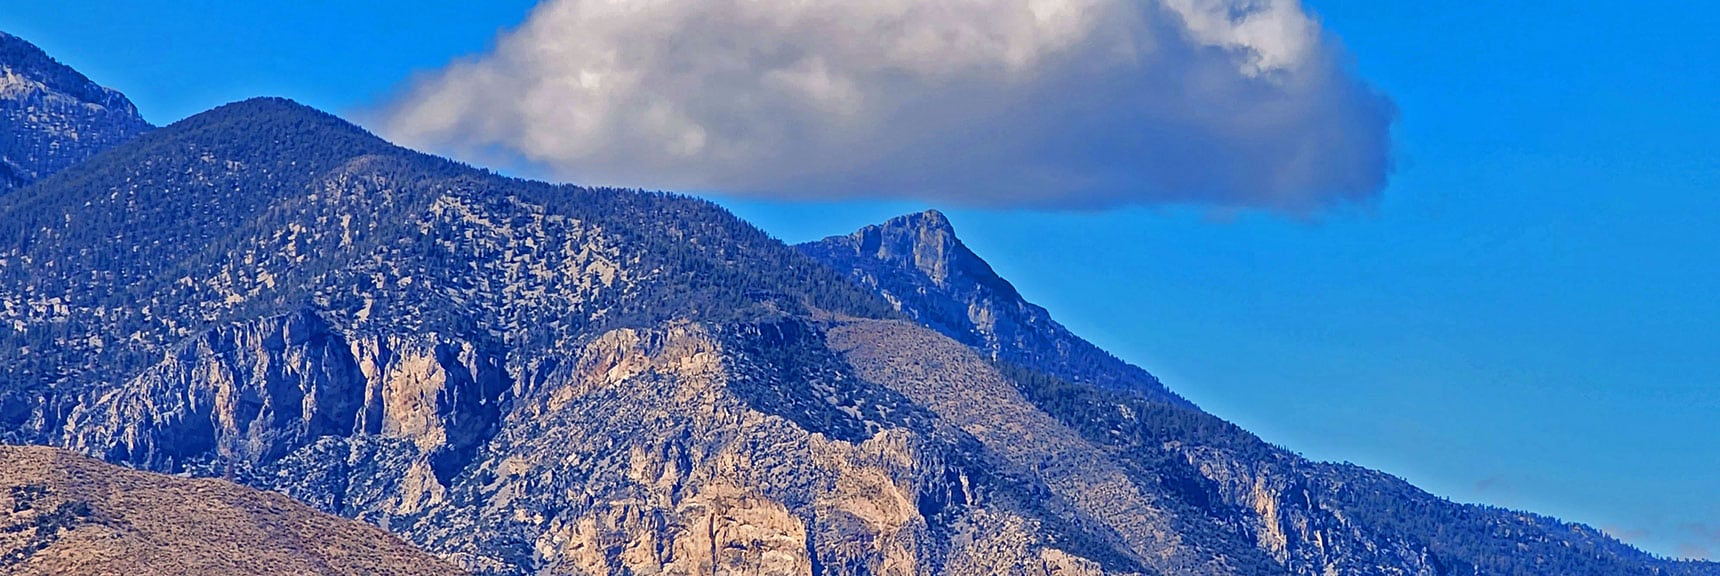 Mummy's Head Under the Cloud. | Keystone Thrust West Summit Above White Rock Mountain | La Madre Mountains Wilderness, Nevada